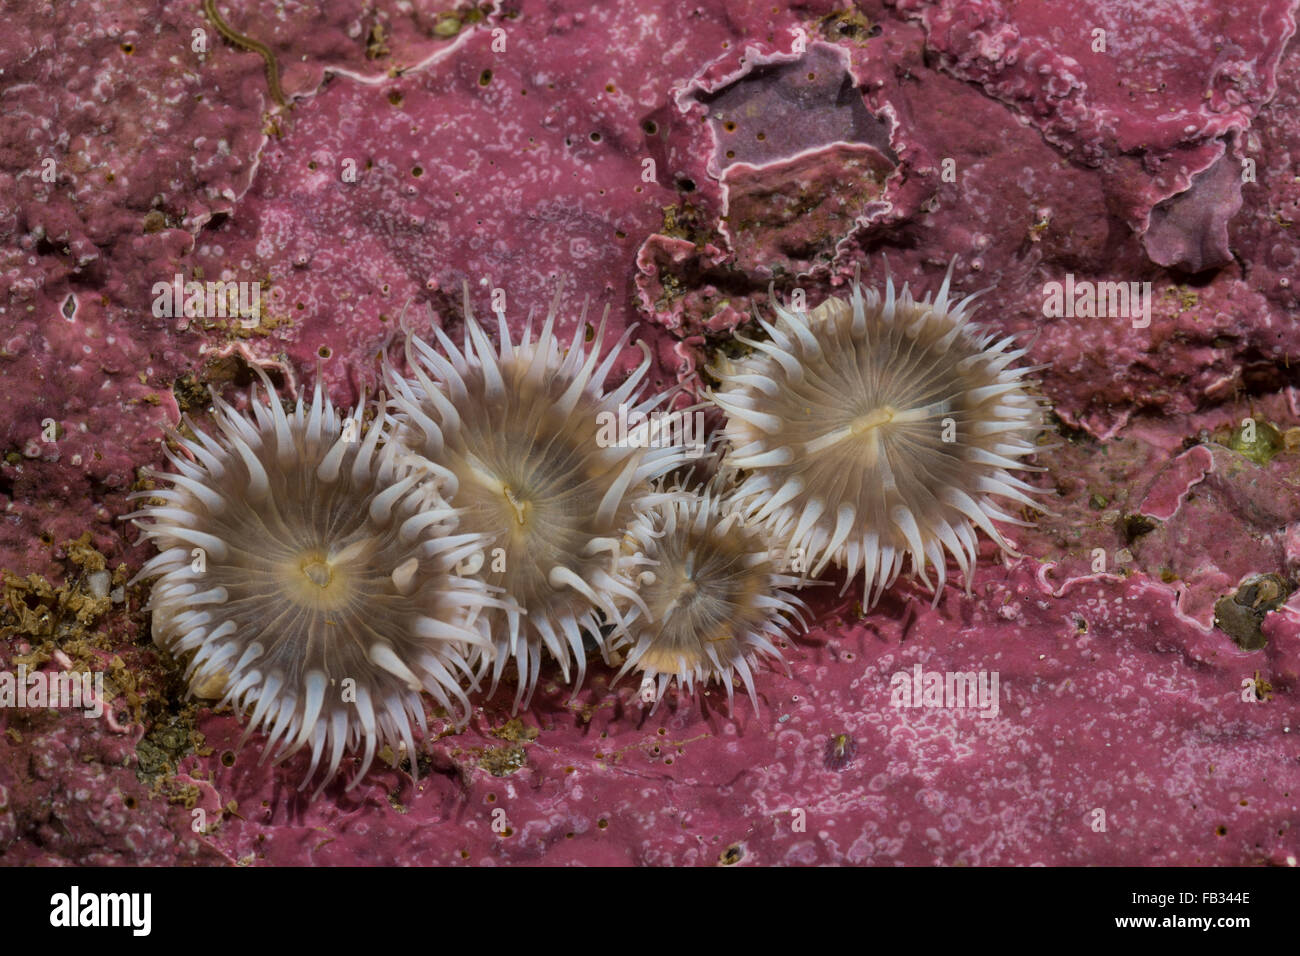 Elegant anemone, Tangrose, Sagartia elegans, Sagartia elegans var. nivea, Actinia elegans, sagartie de vase, Seeanemone Stock Photo